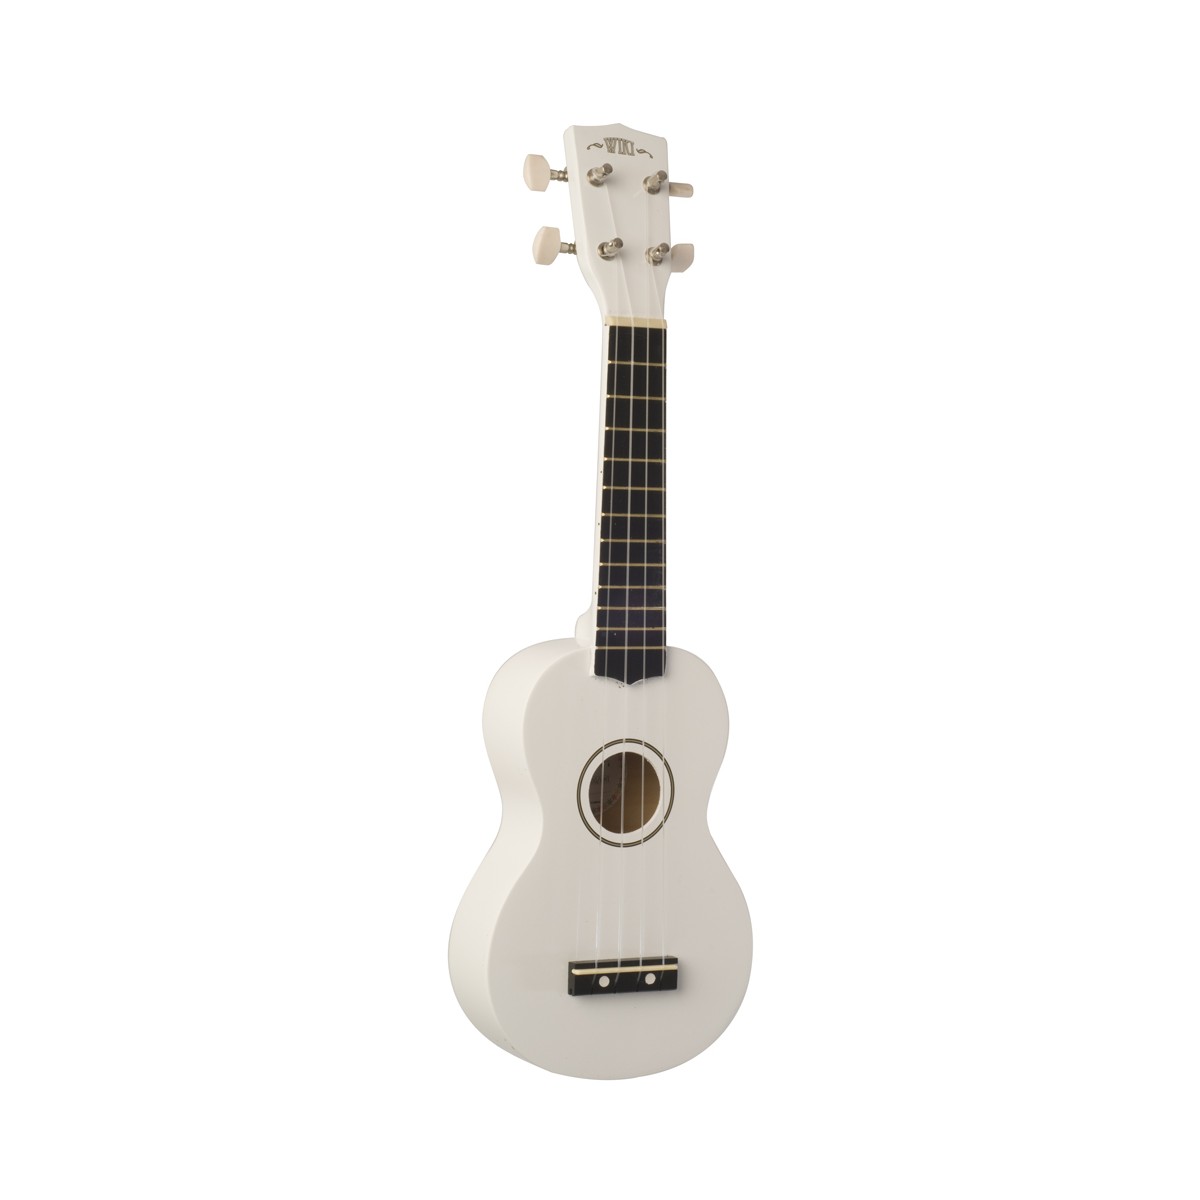 WIKI UK10G WHT -  гитара укулеле сопрано, клен, цвет белый глянец, чехол в комплекте